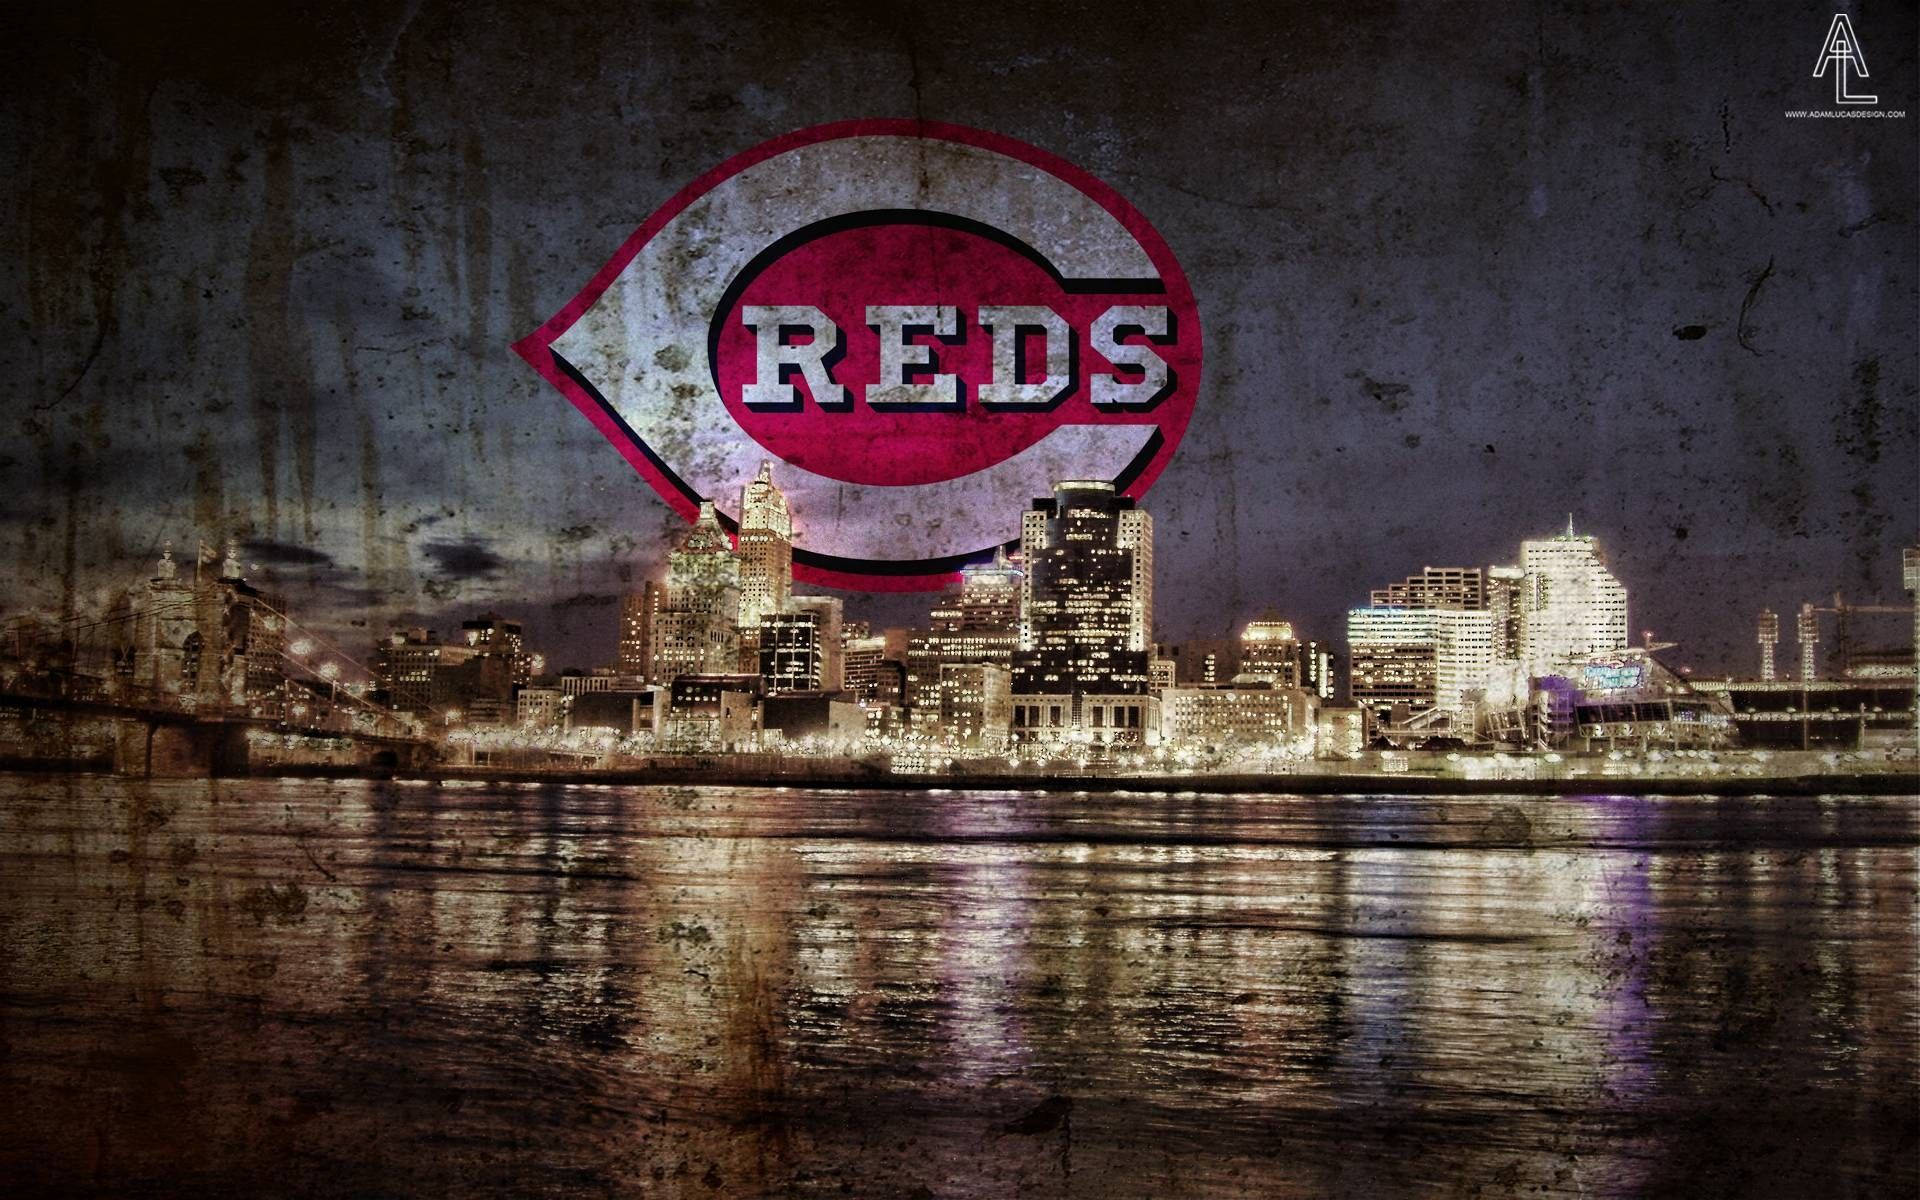 Cincinnati Reds Conquers The Town